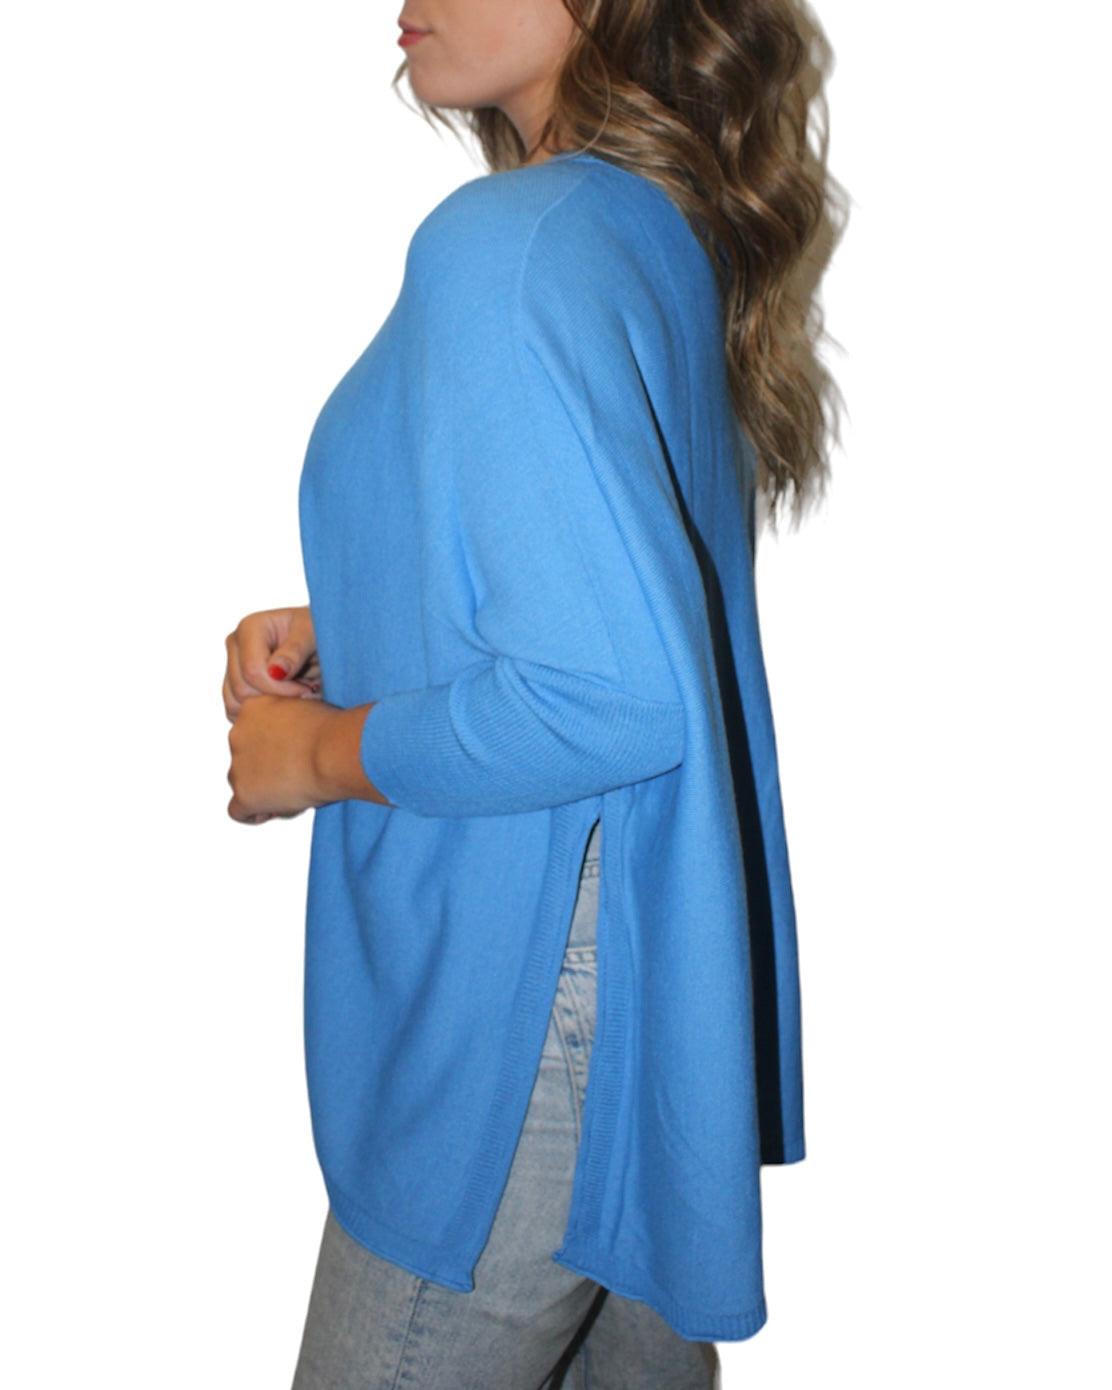 Catalina Sweater - Bright Blue